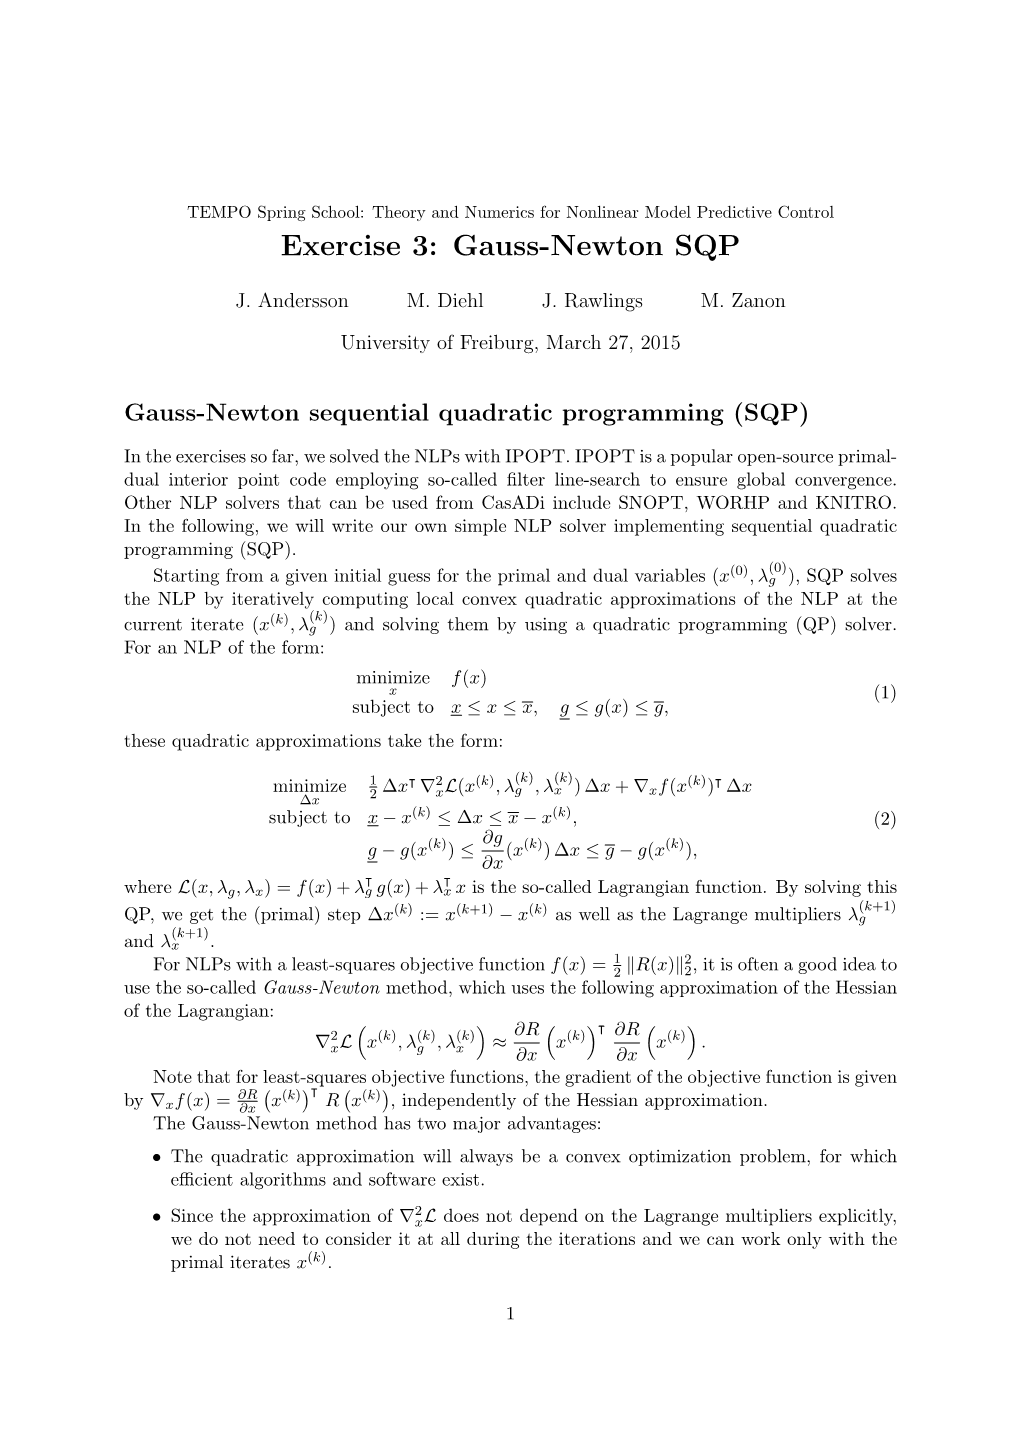 Gauss-Newton SQP